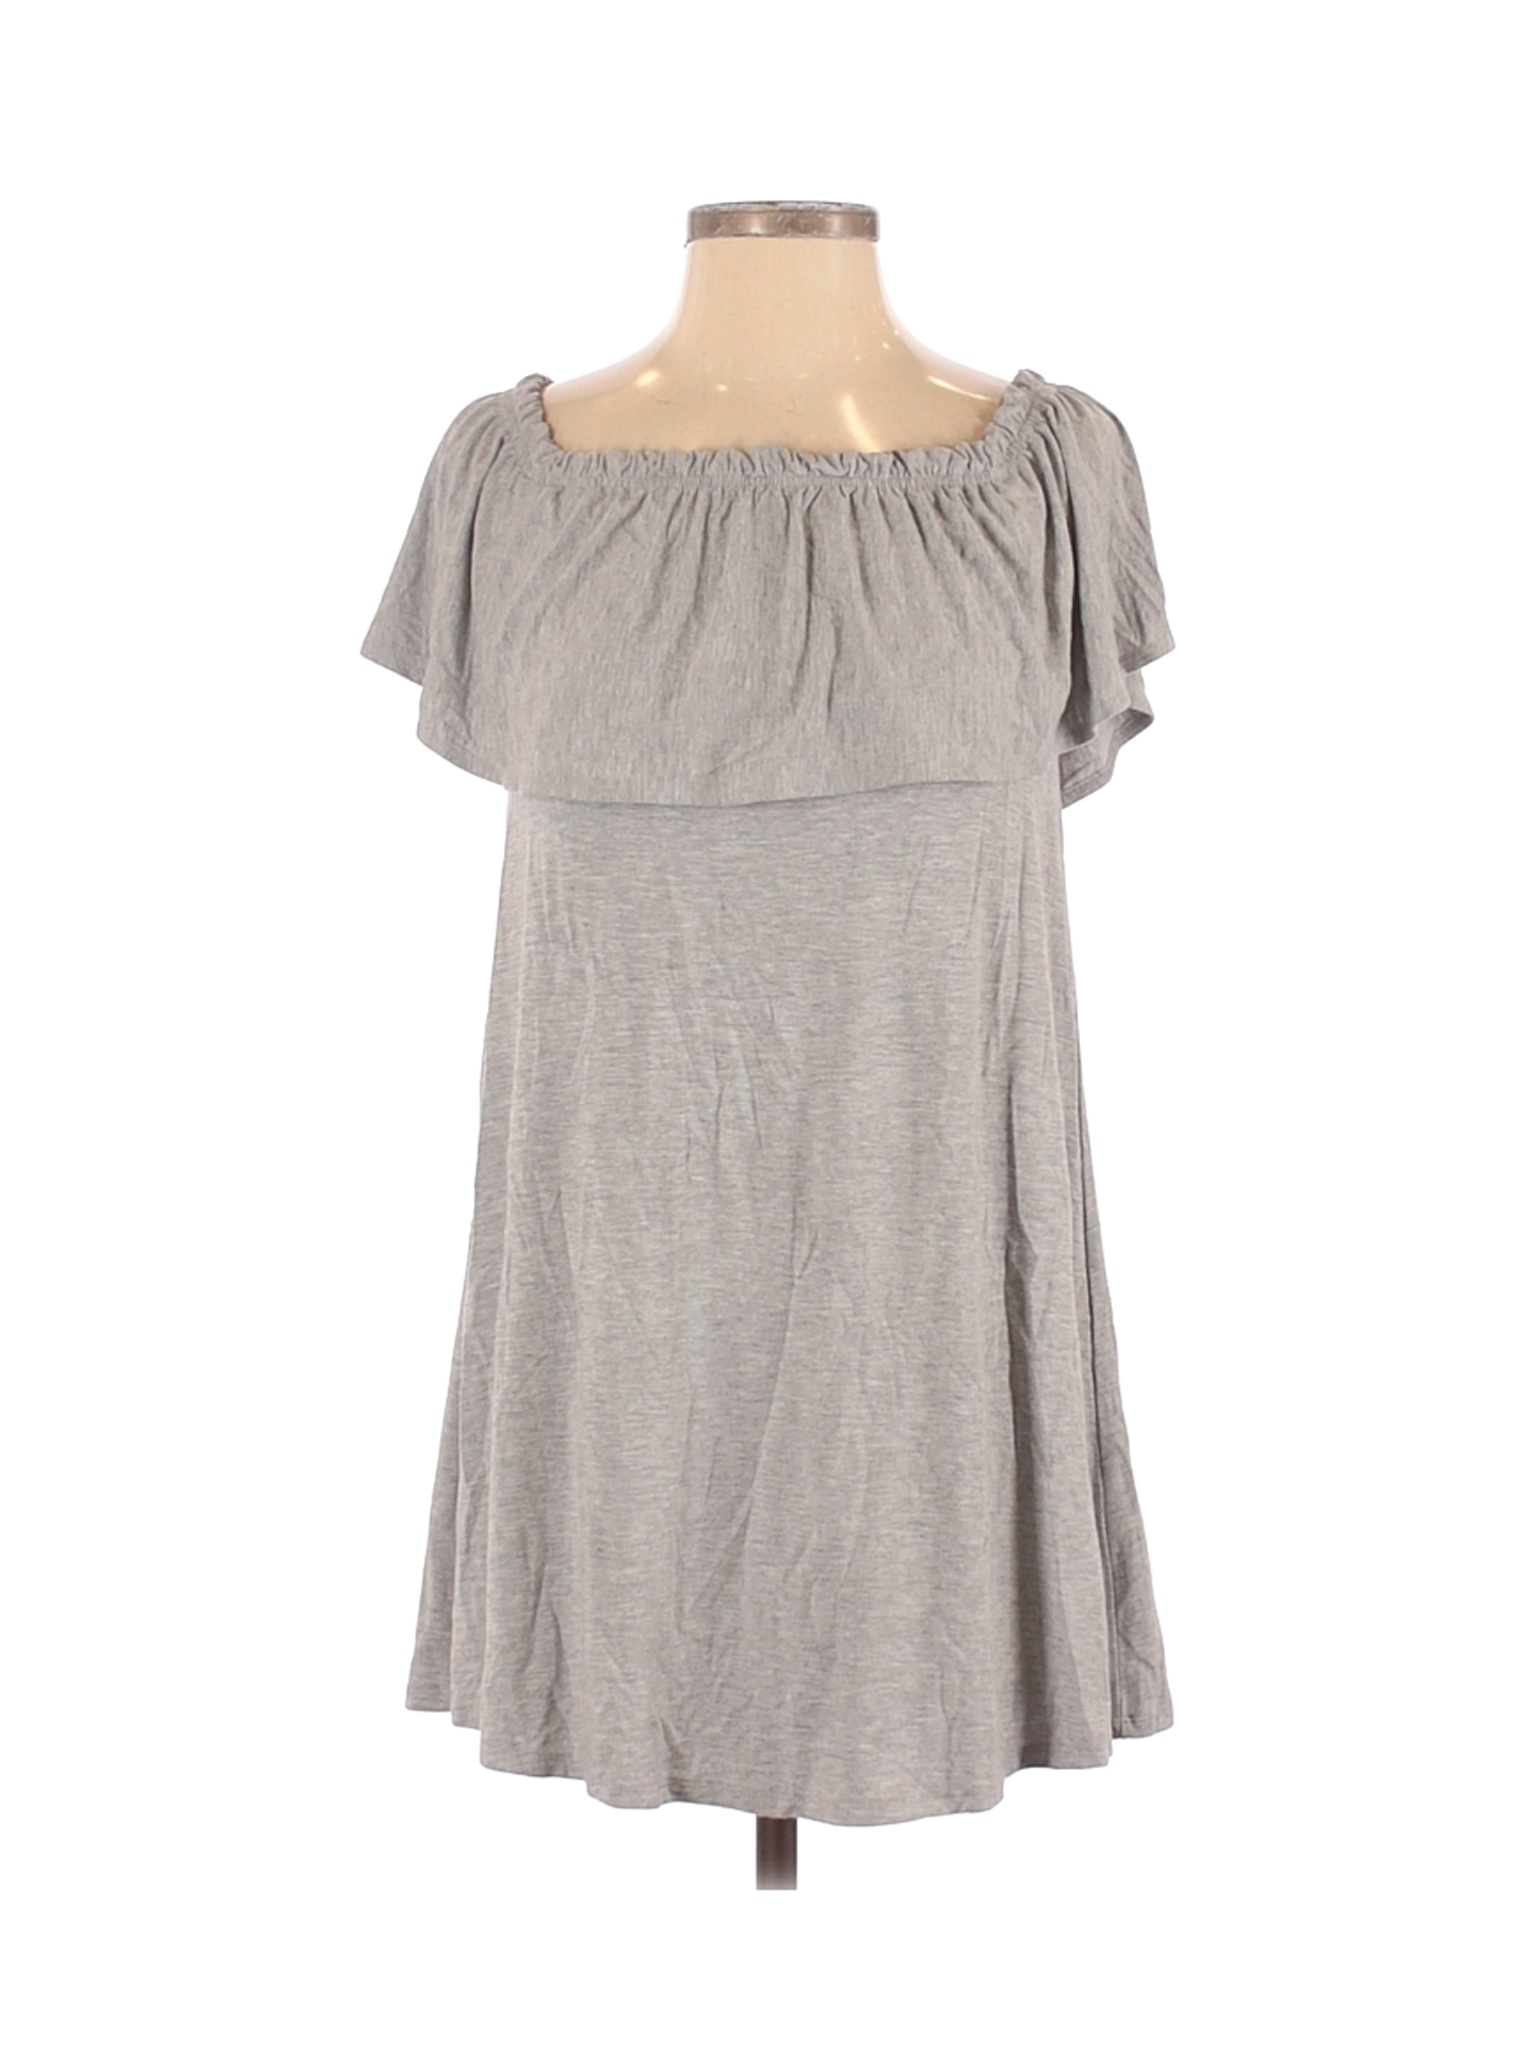 Abercrombie & Fitch Women Gray Casual Dress S | eBay